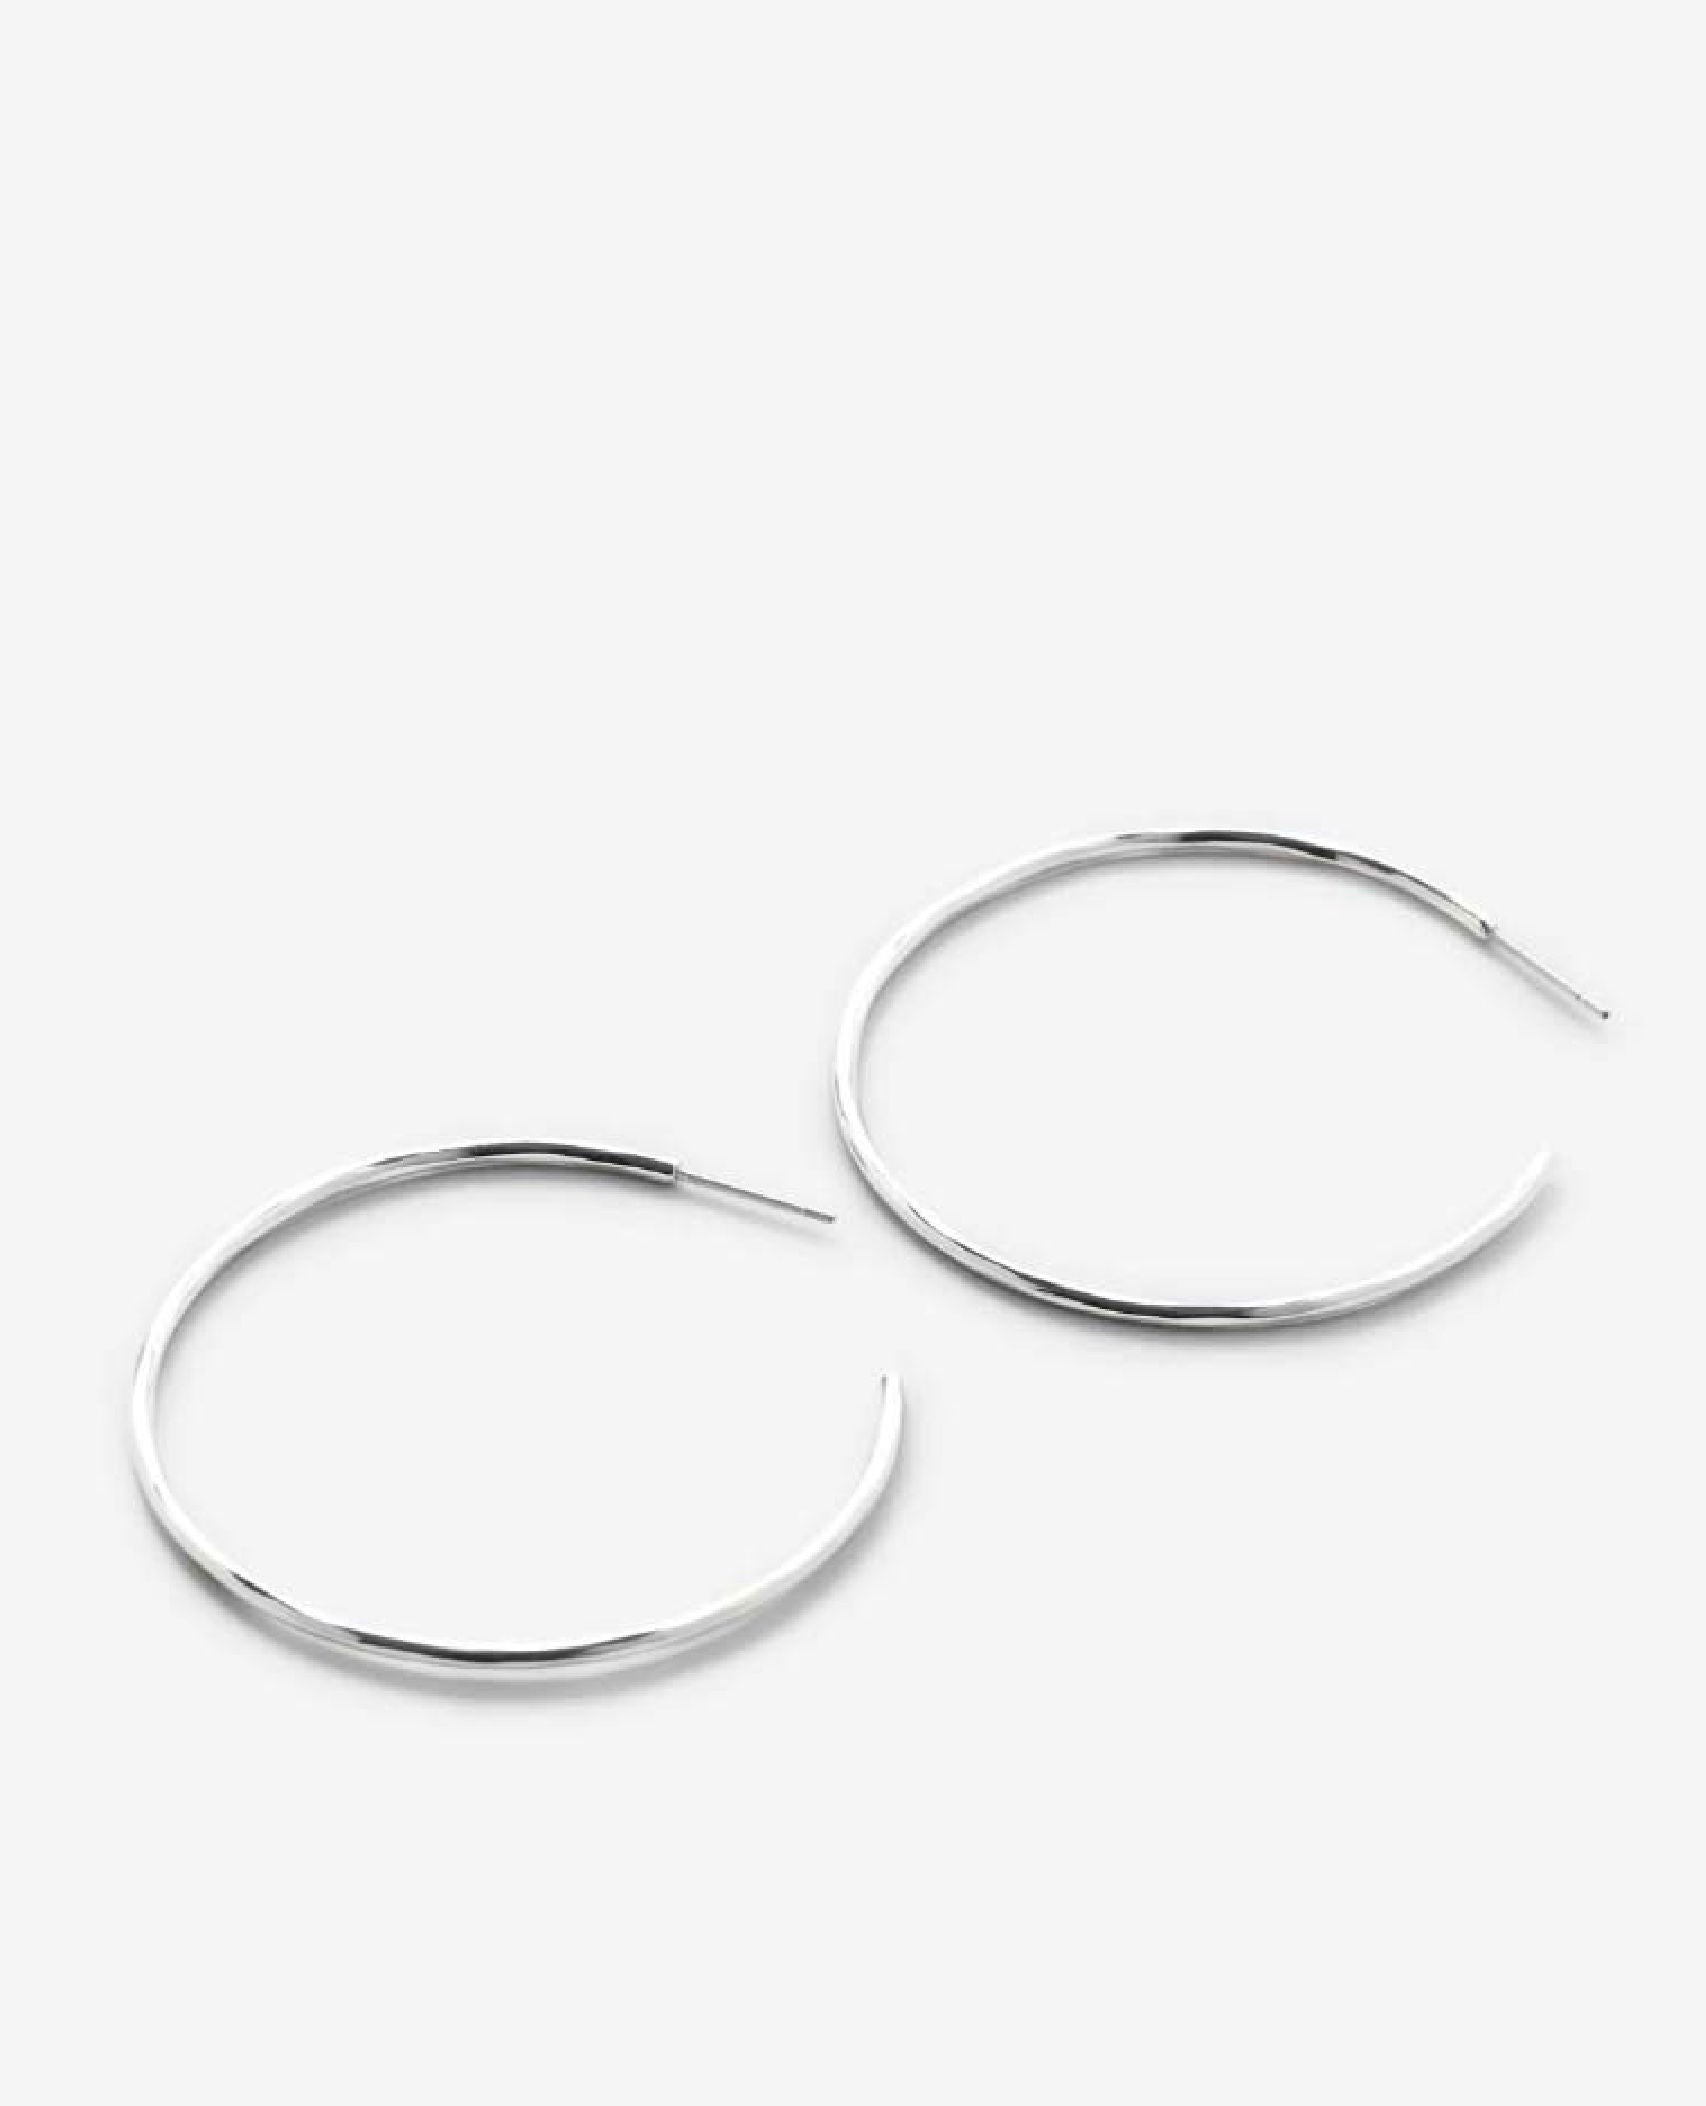 Simplicity Maxi Hoop Earrings Silver